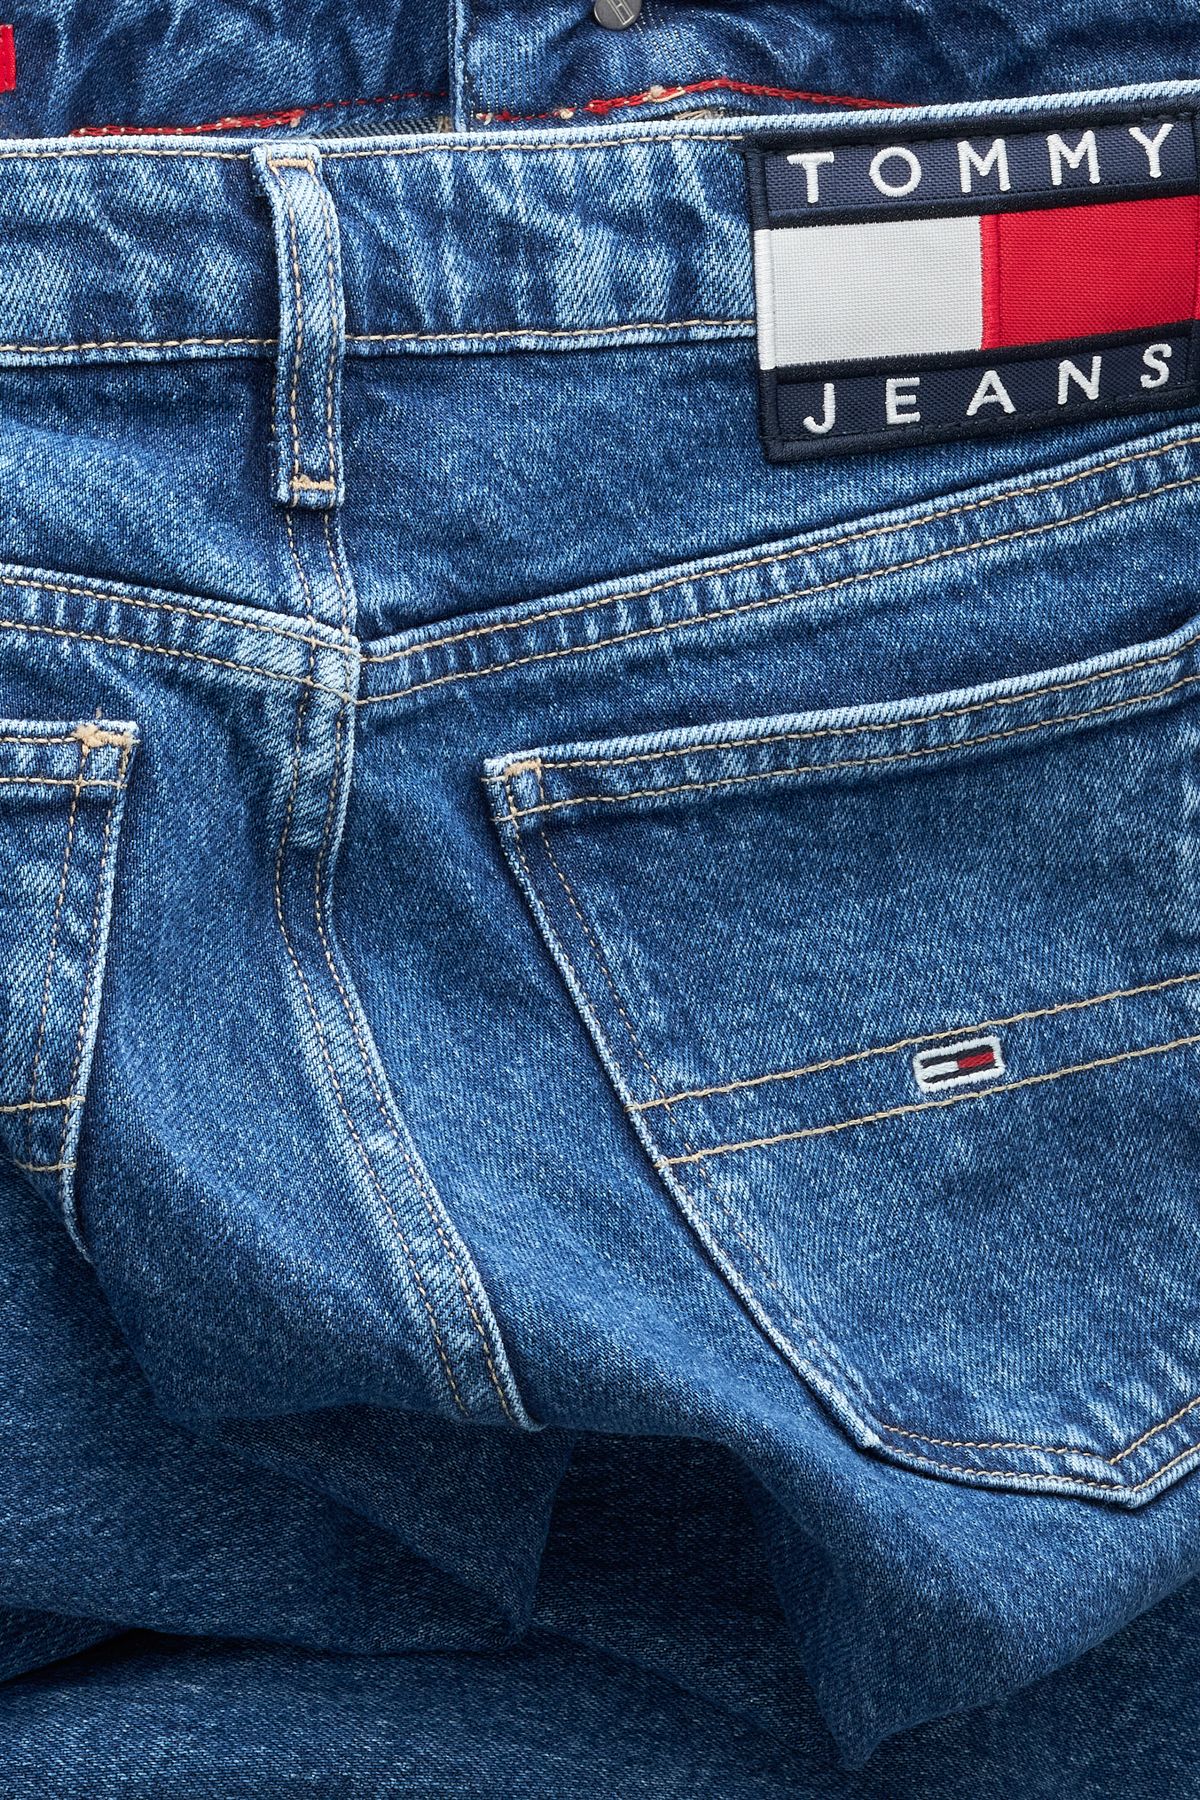 Tommy Hilfiger Jeans - Dark blue - Wide leg - Trendyol